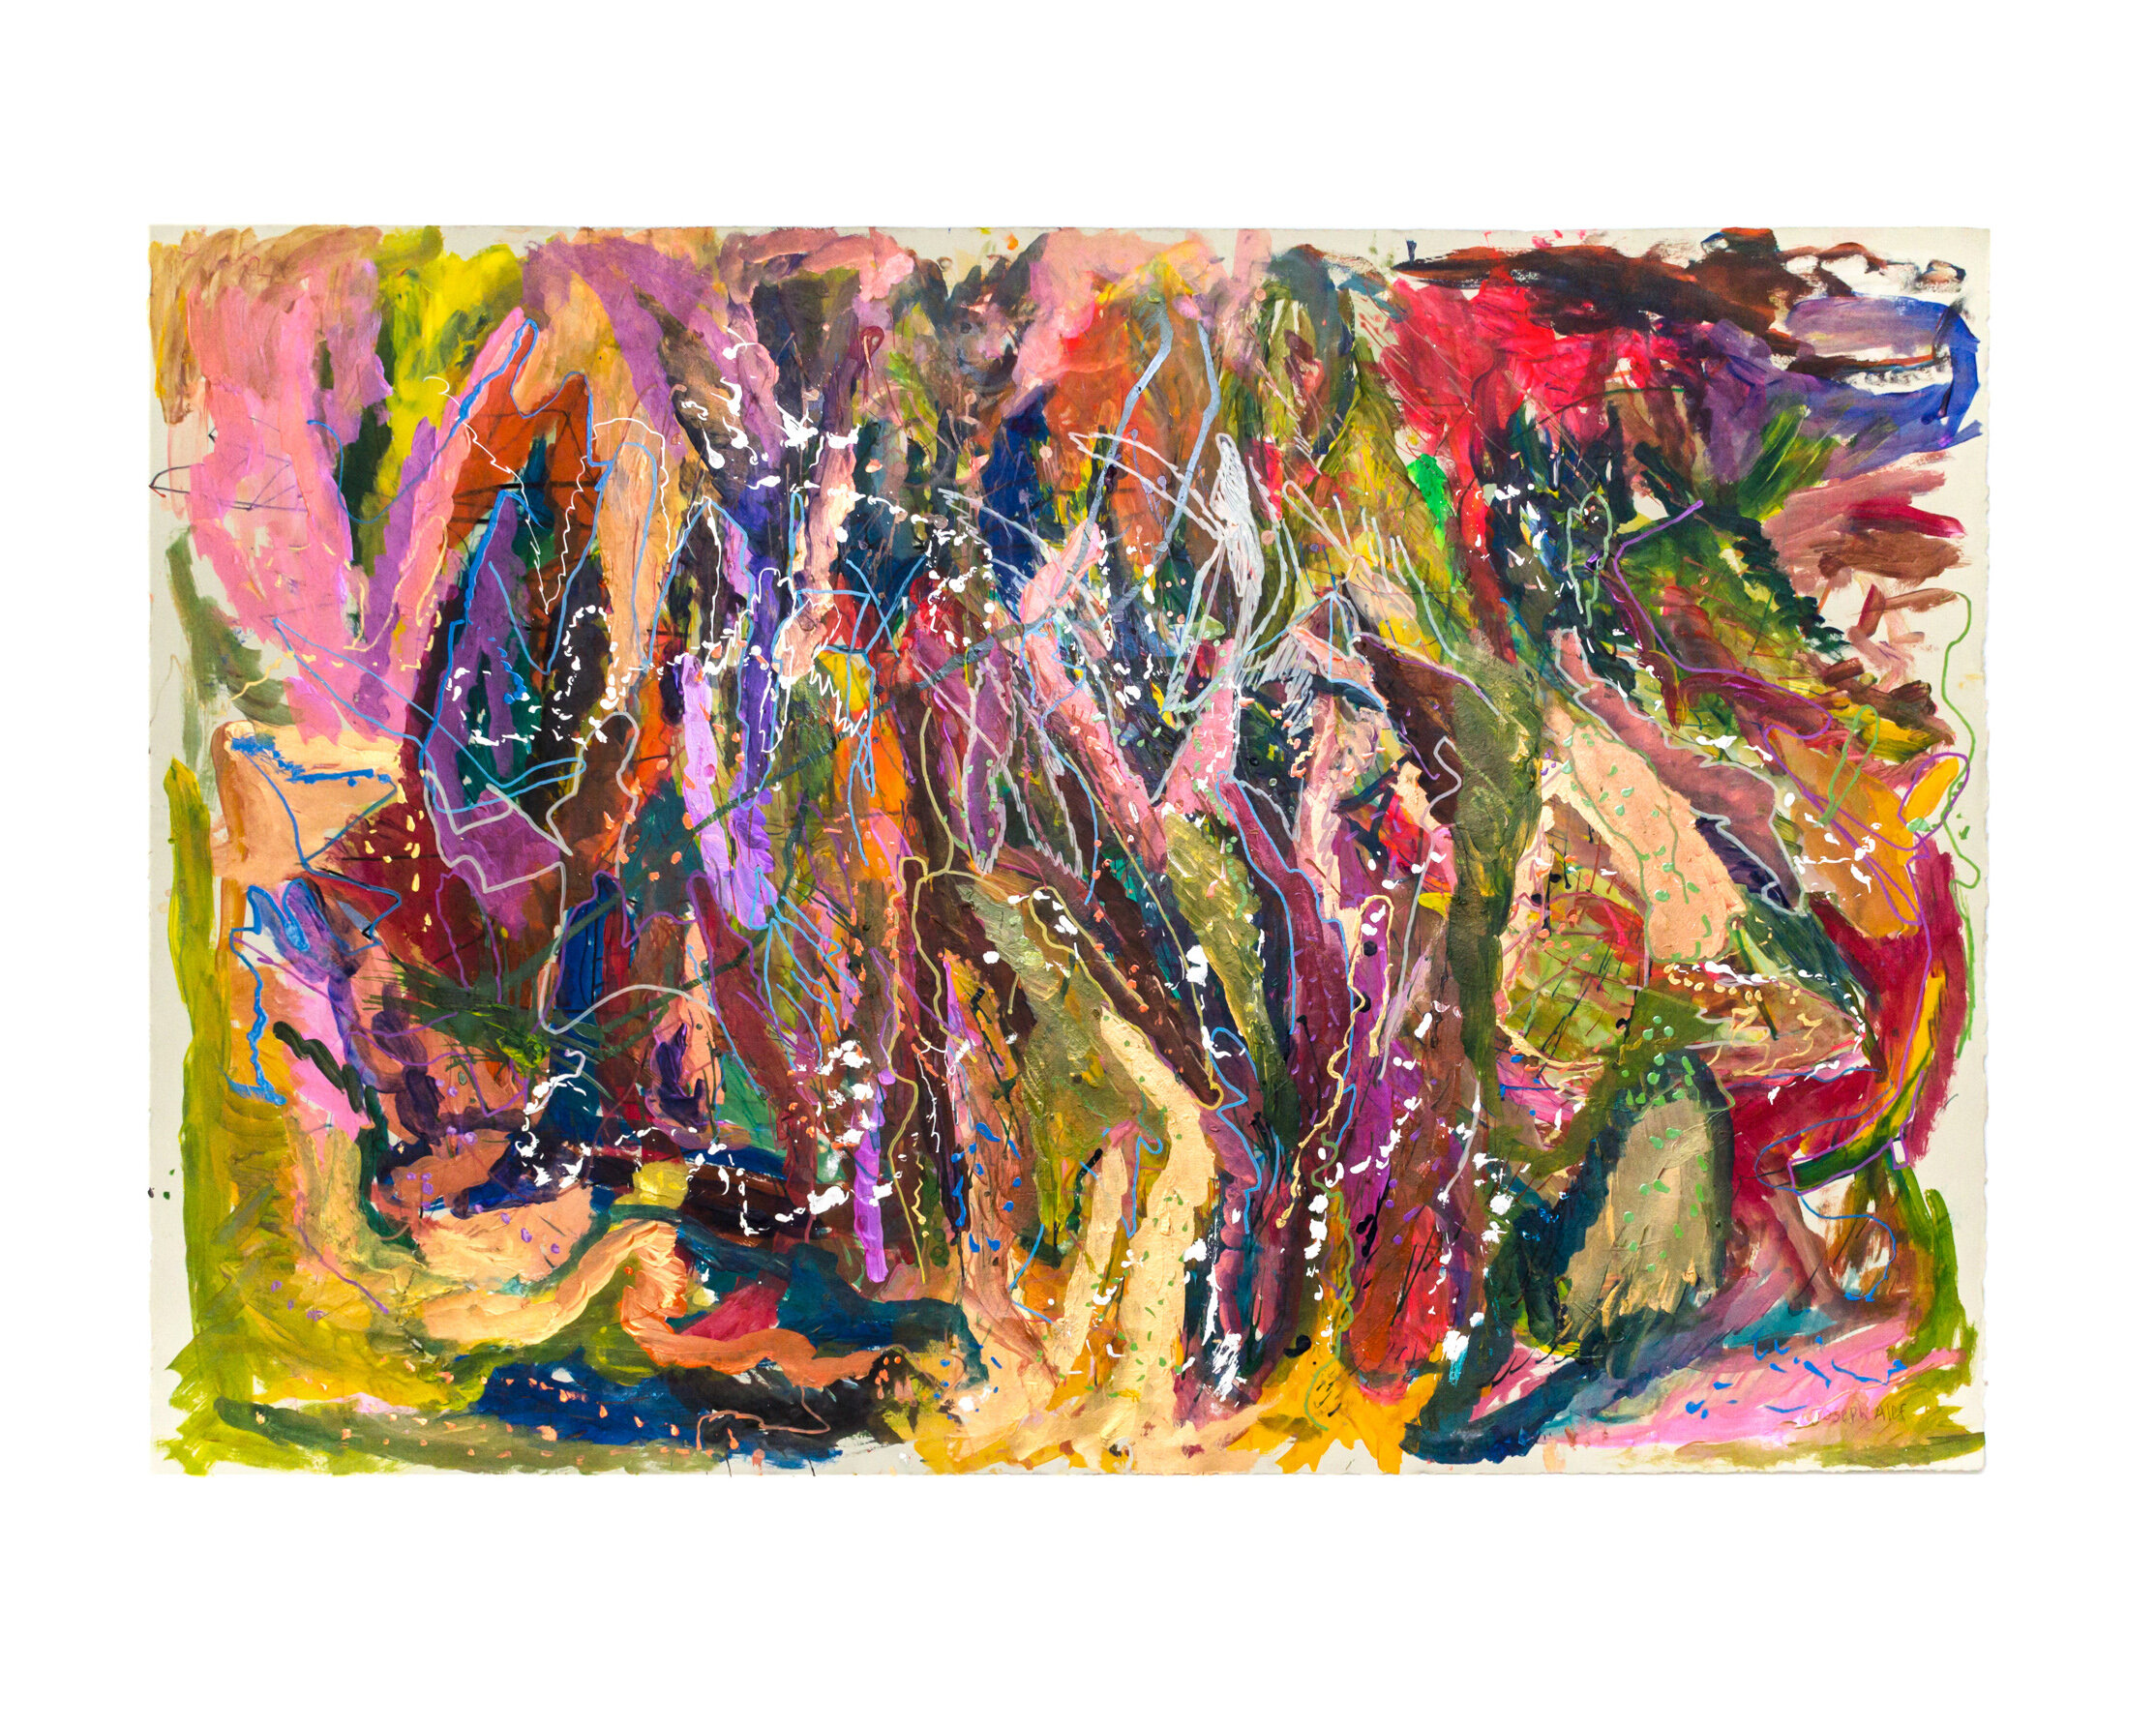 Joseph Alef, Untitled (JA 103), 2018, Acrylic on paper, 30x44.5 inches